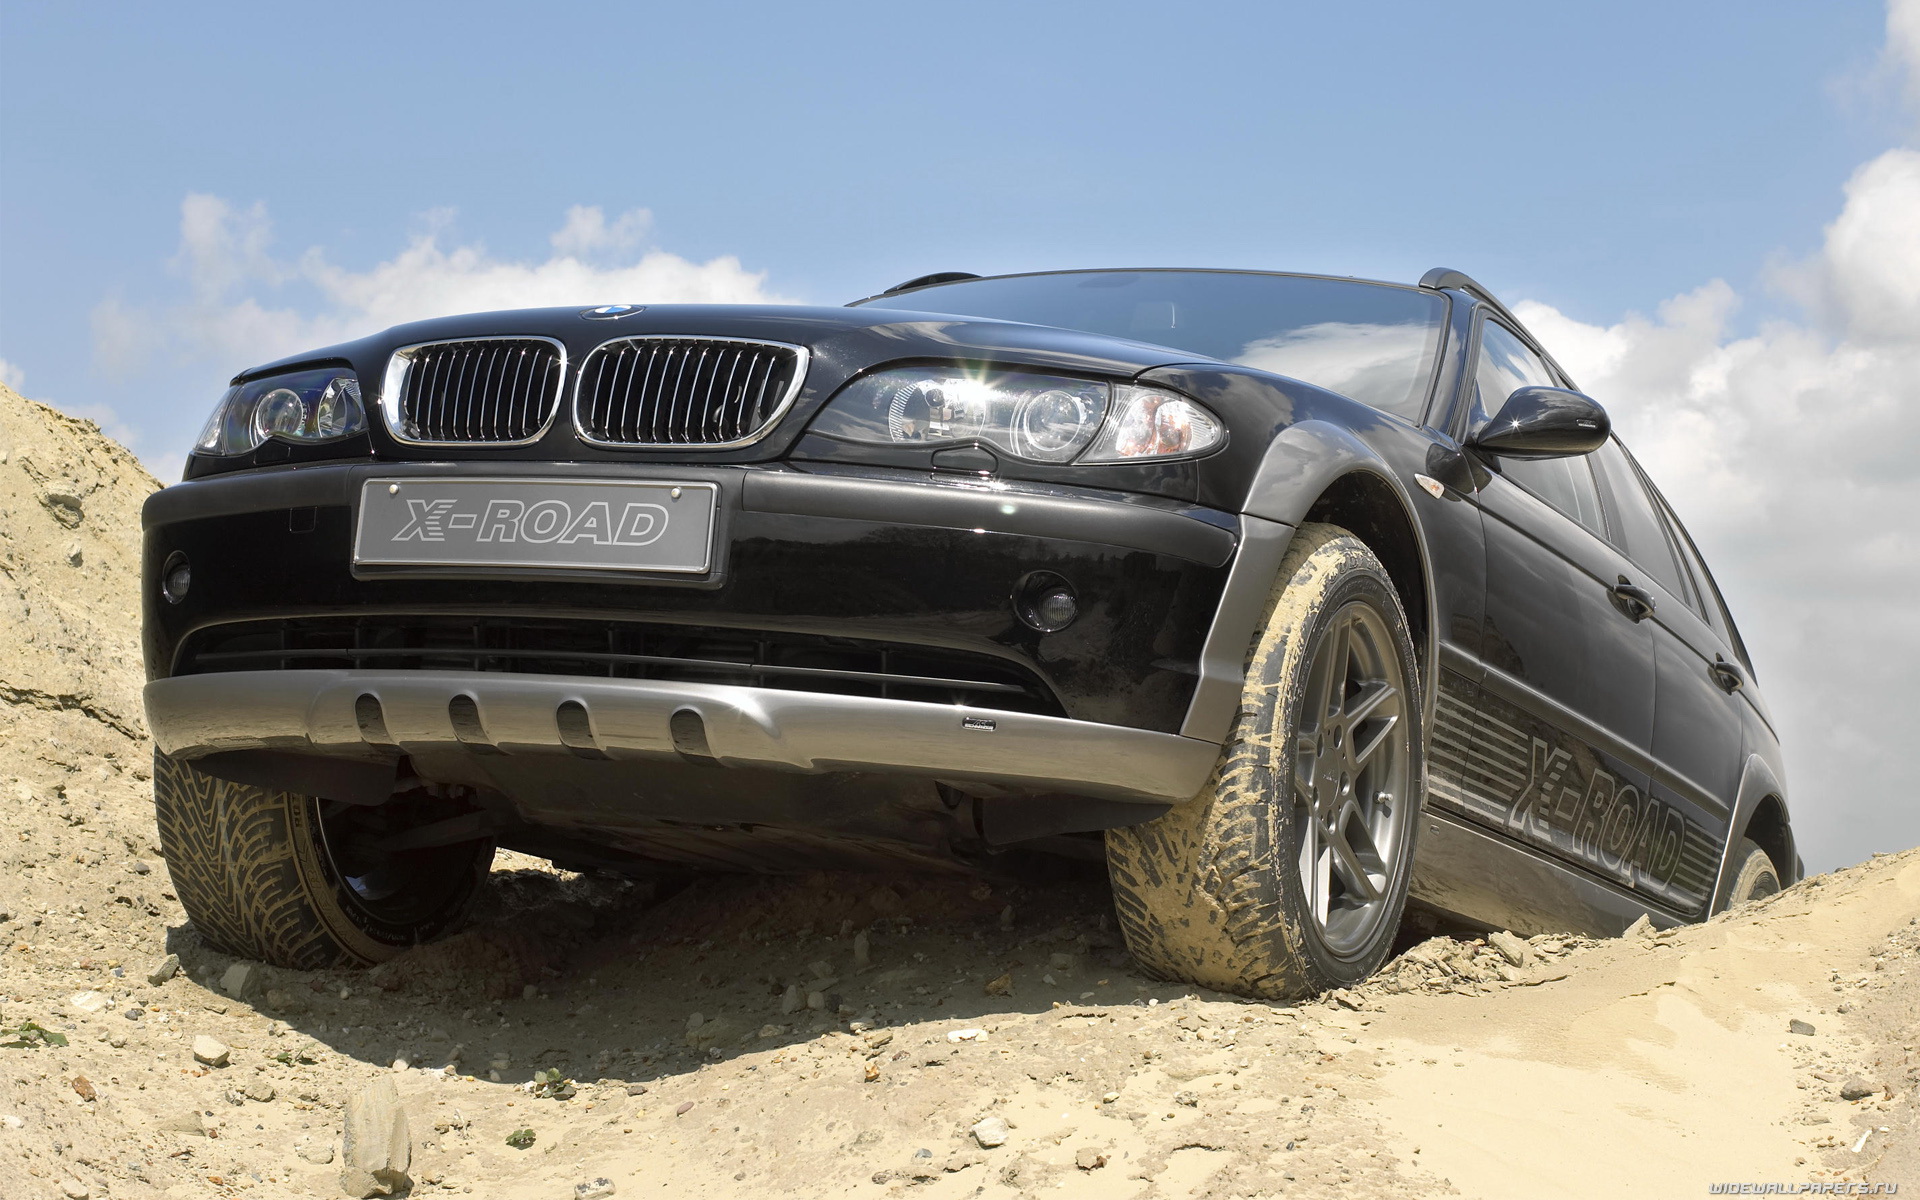 3d обои BMW x-road забрался на гору песка  бренд # 21126